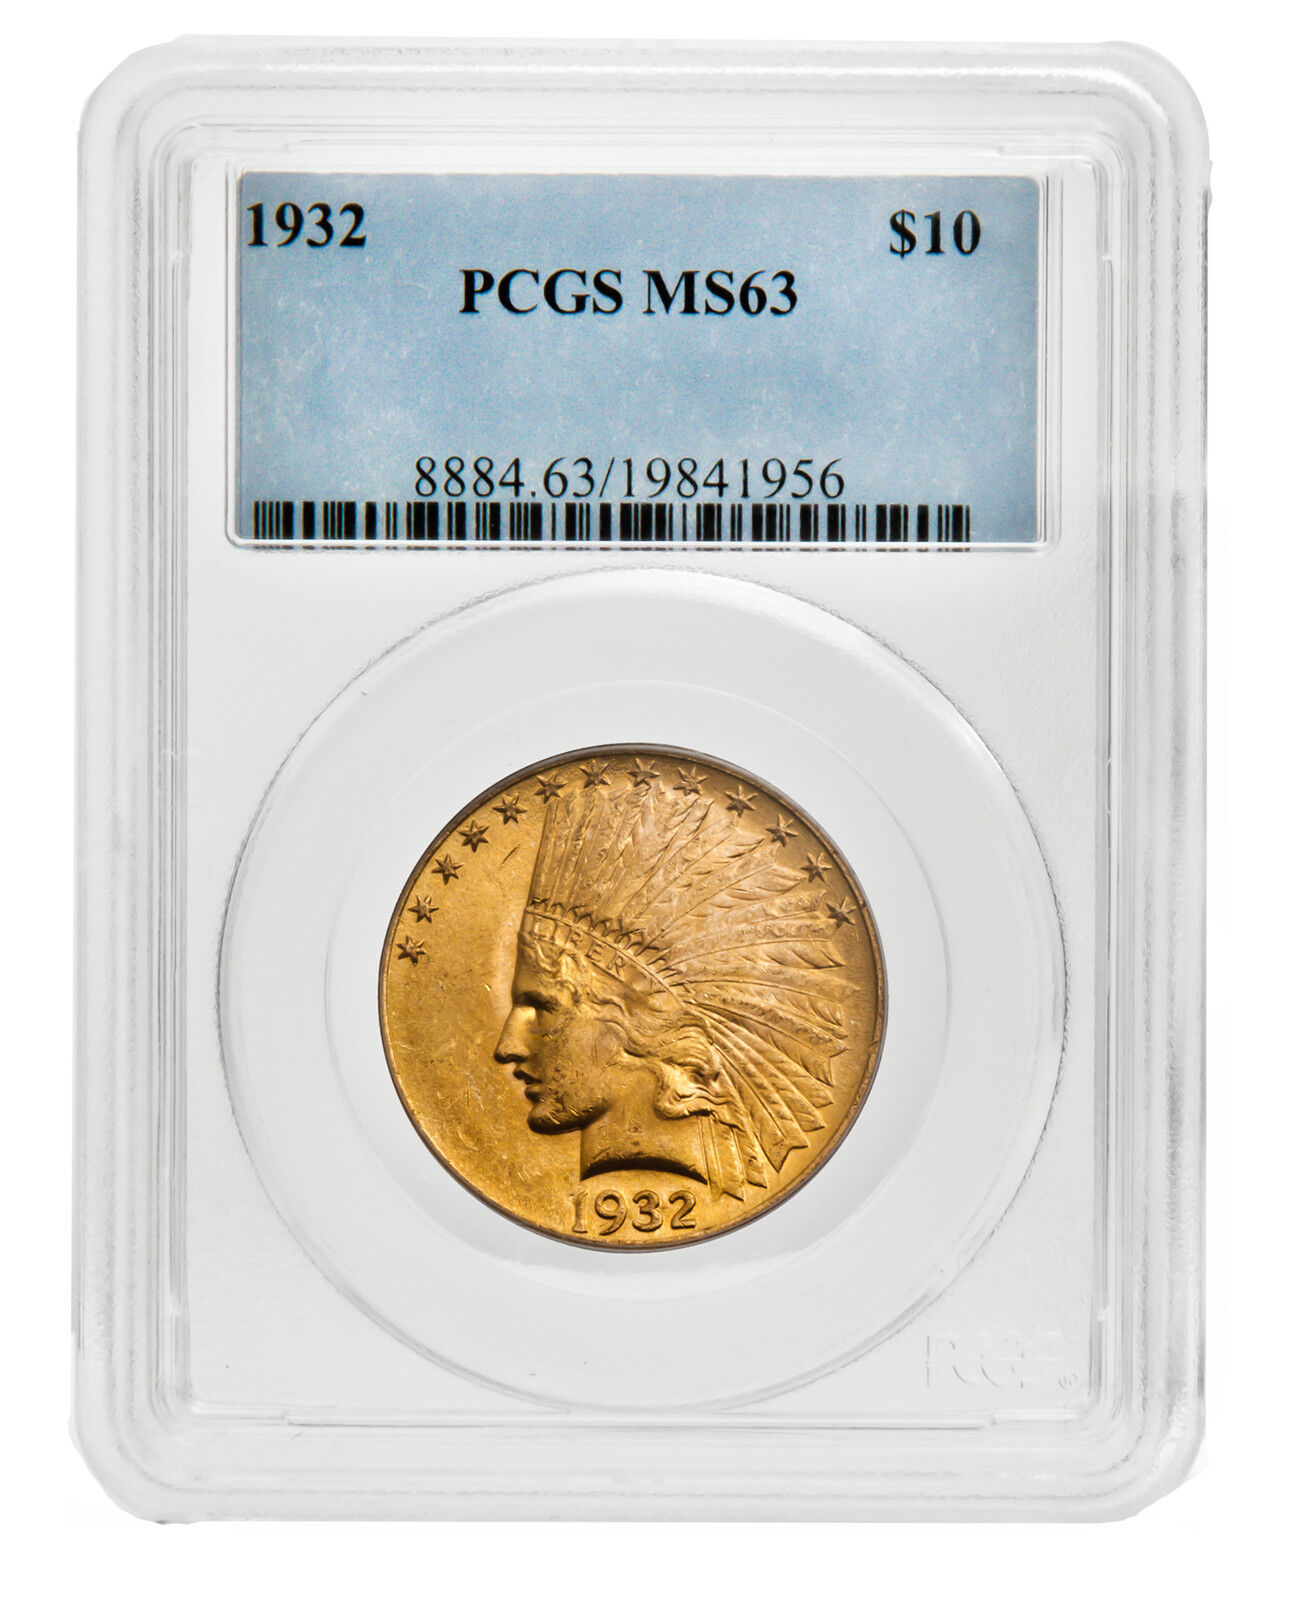 $10 Indian Gold Eagle Coin - Random Year - MS-63 PCGS - SKU #12919